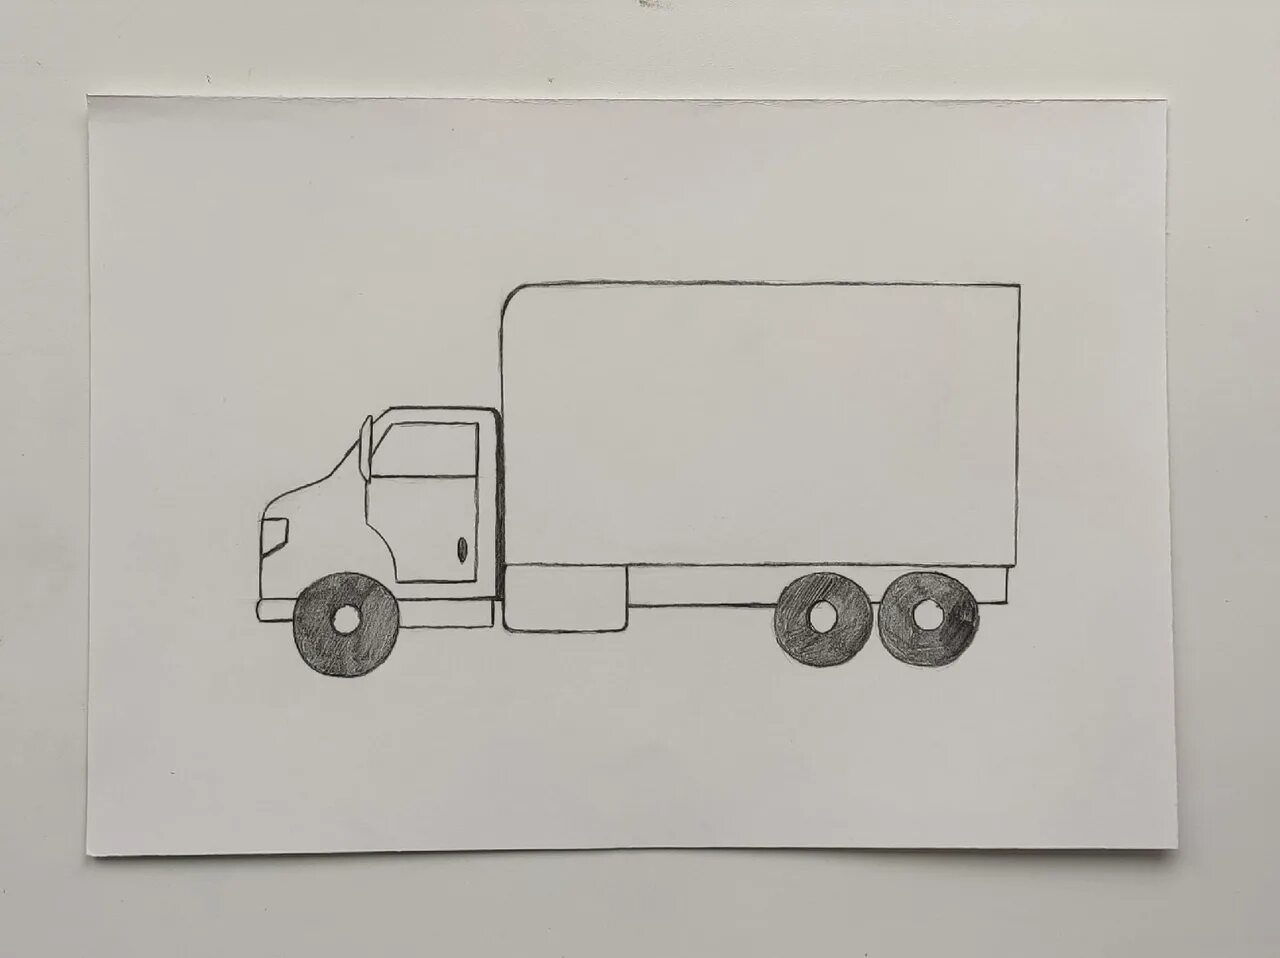 Постройте грузовик. Грузовик рисунок карандашом. Грузовая машина рисунок карандашом. Рисунок грузового автомобиля карандашом. Грузовой автомобиль рисование пошагово.